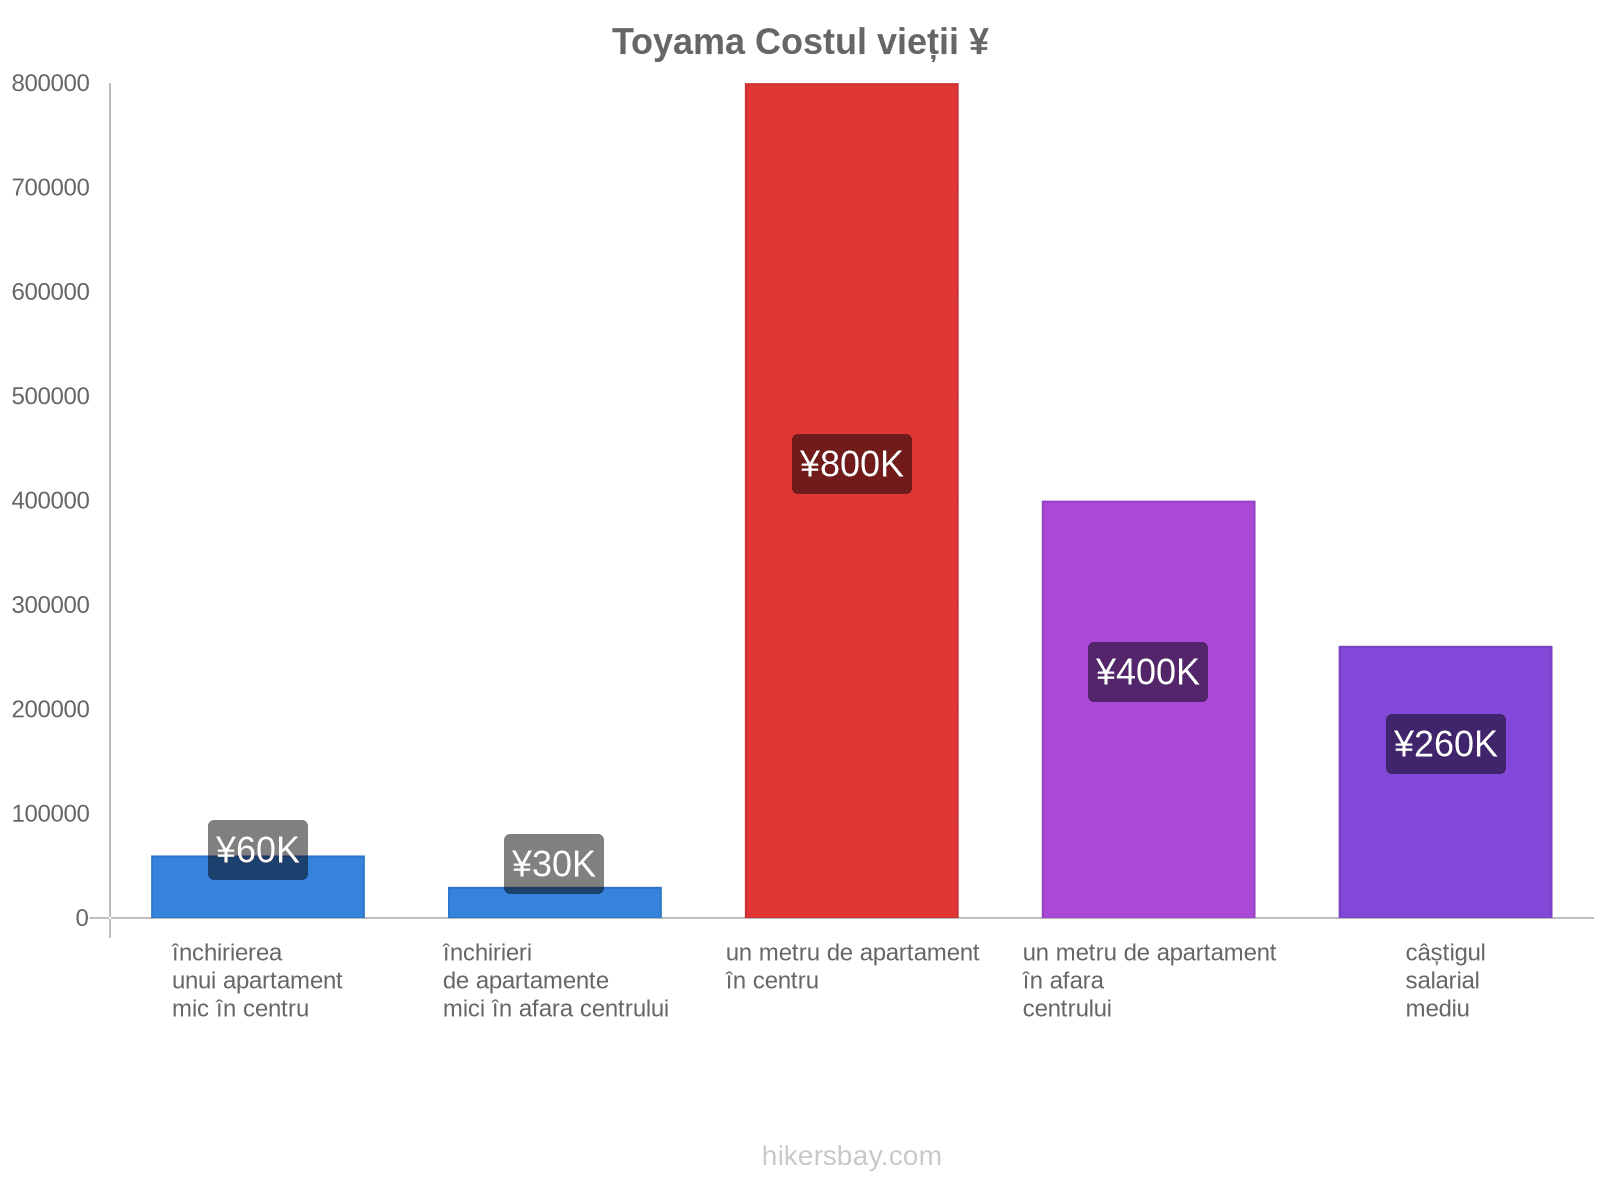 Toyama costul vieții hikersbay.com